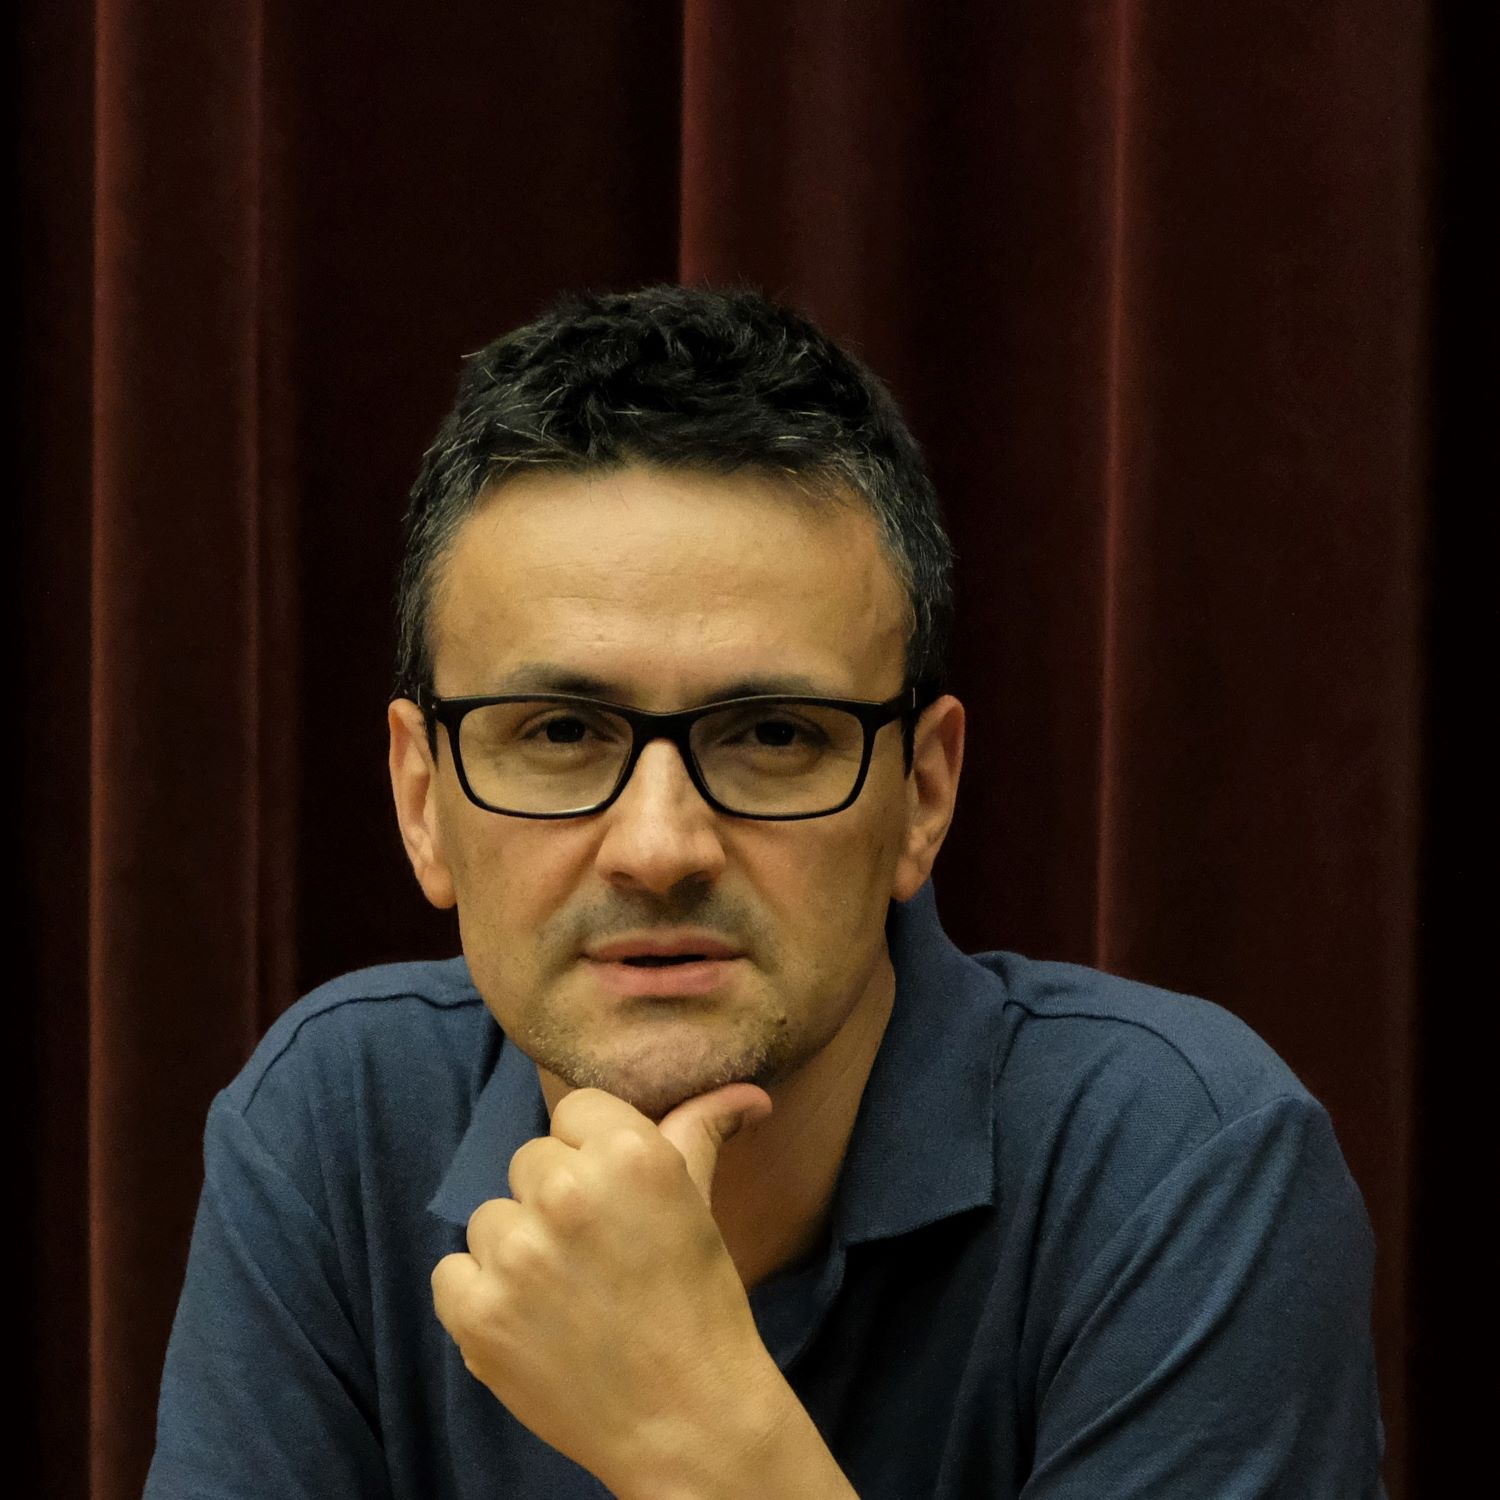 Paulo Bastos